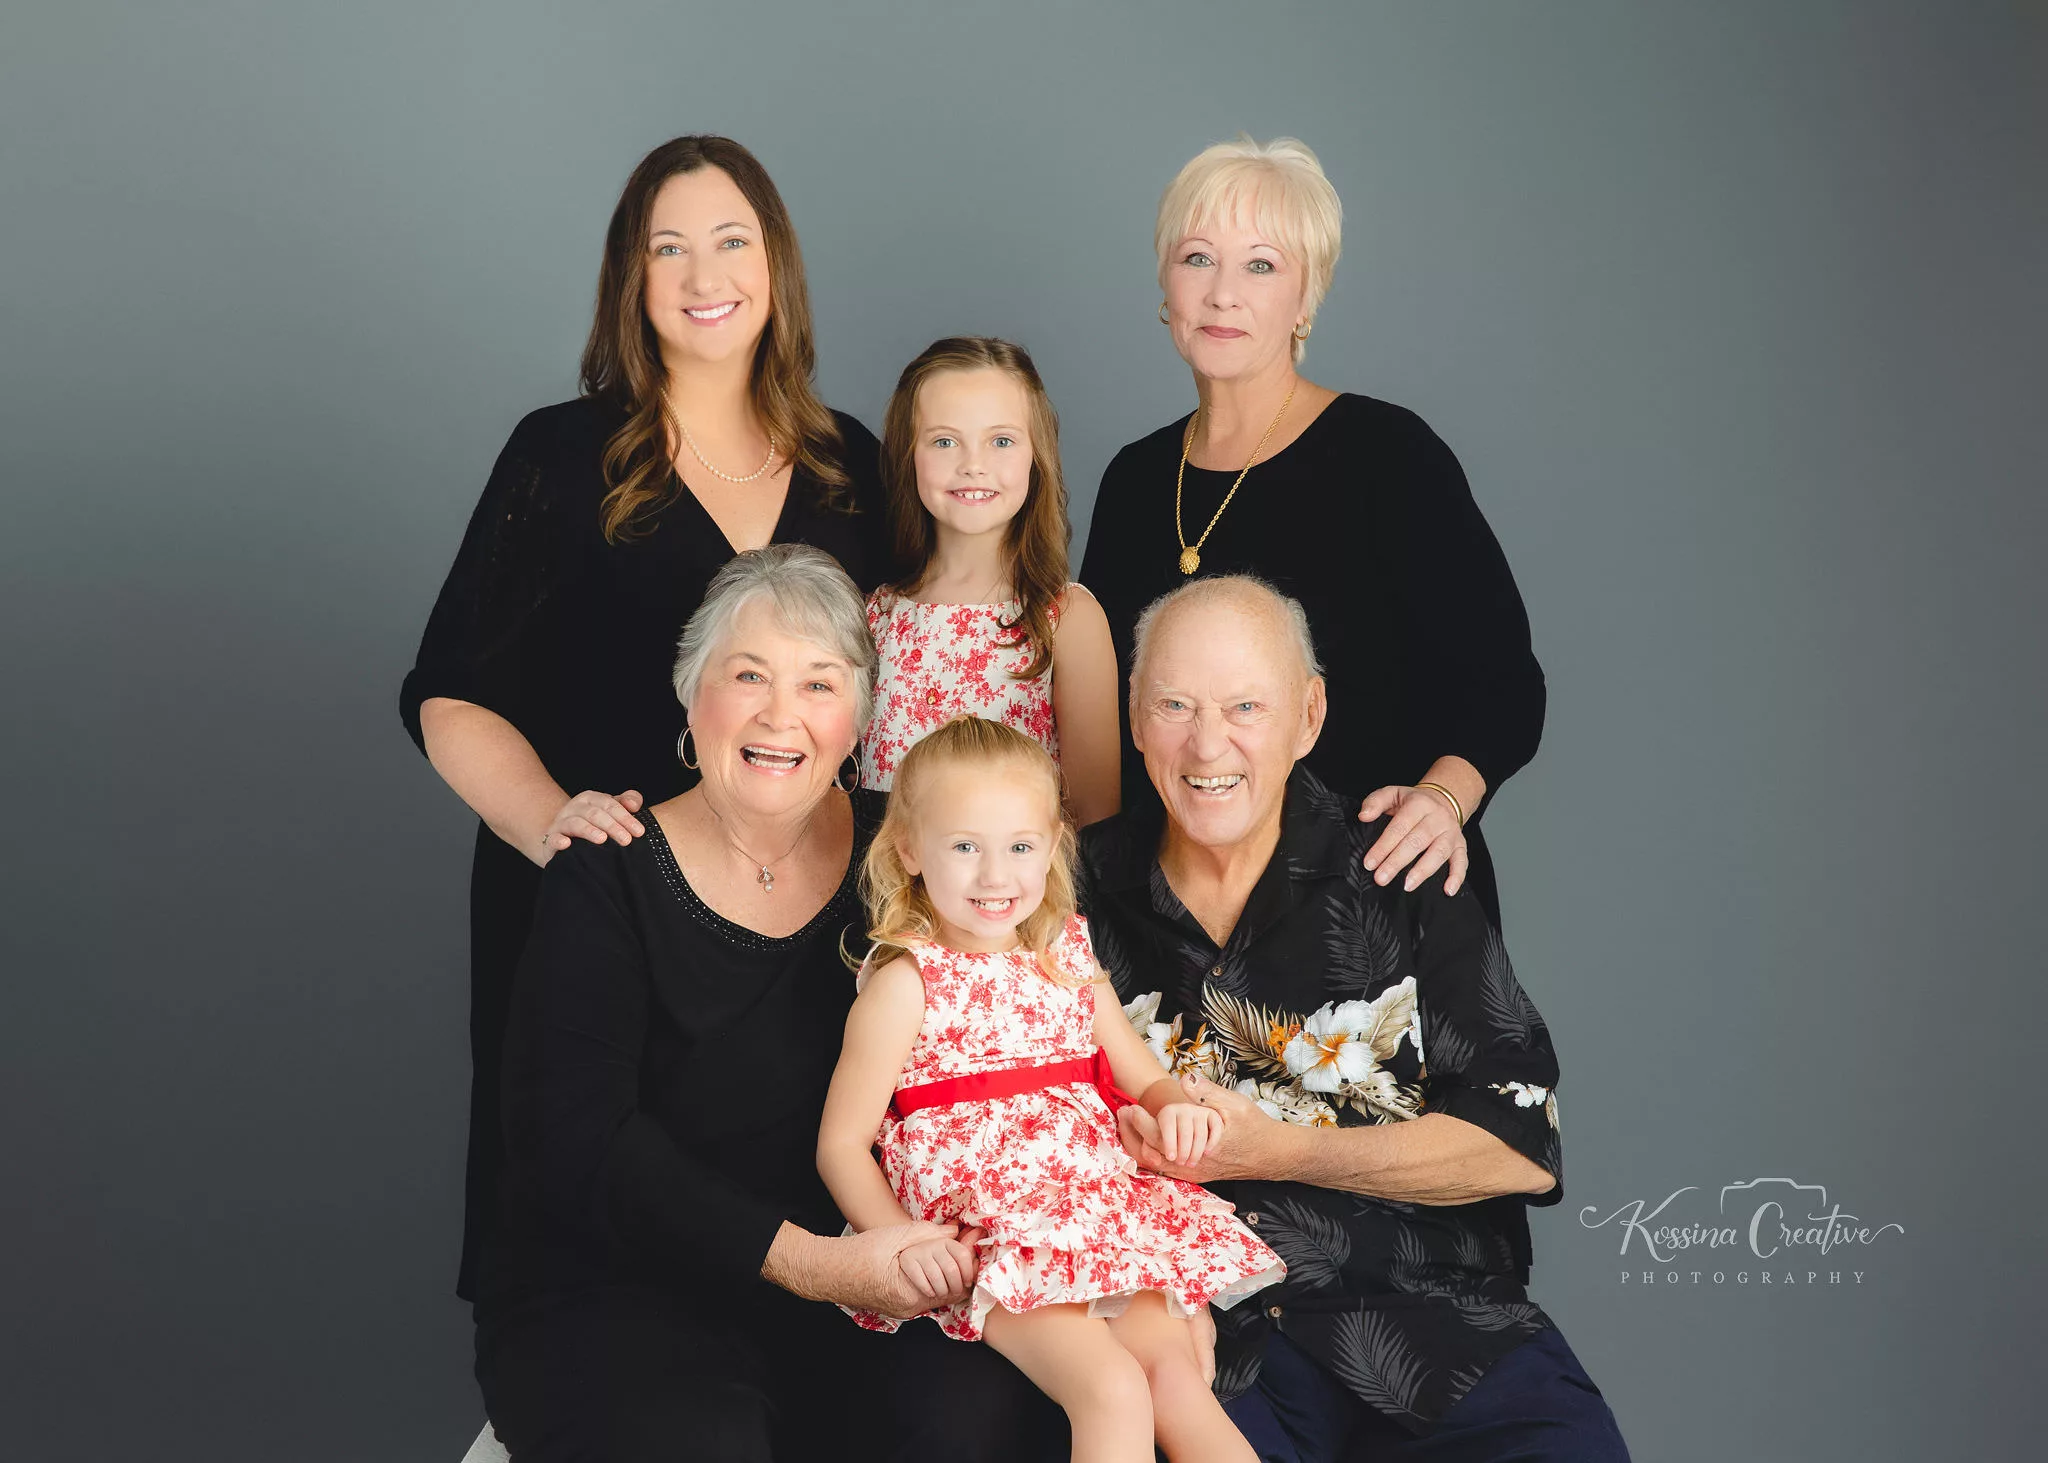 orlando photo studio family photographer studio portraits generations grey background black outfits grandparents matching kid dresses